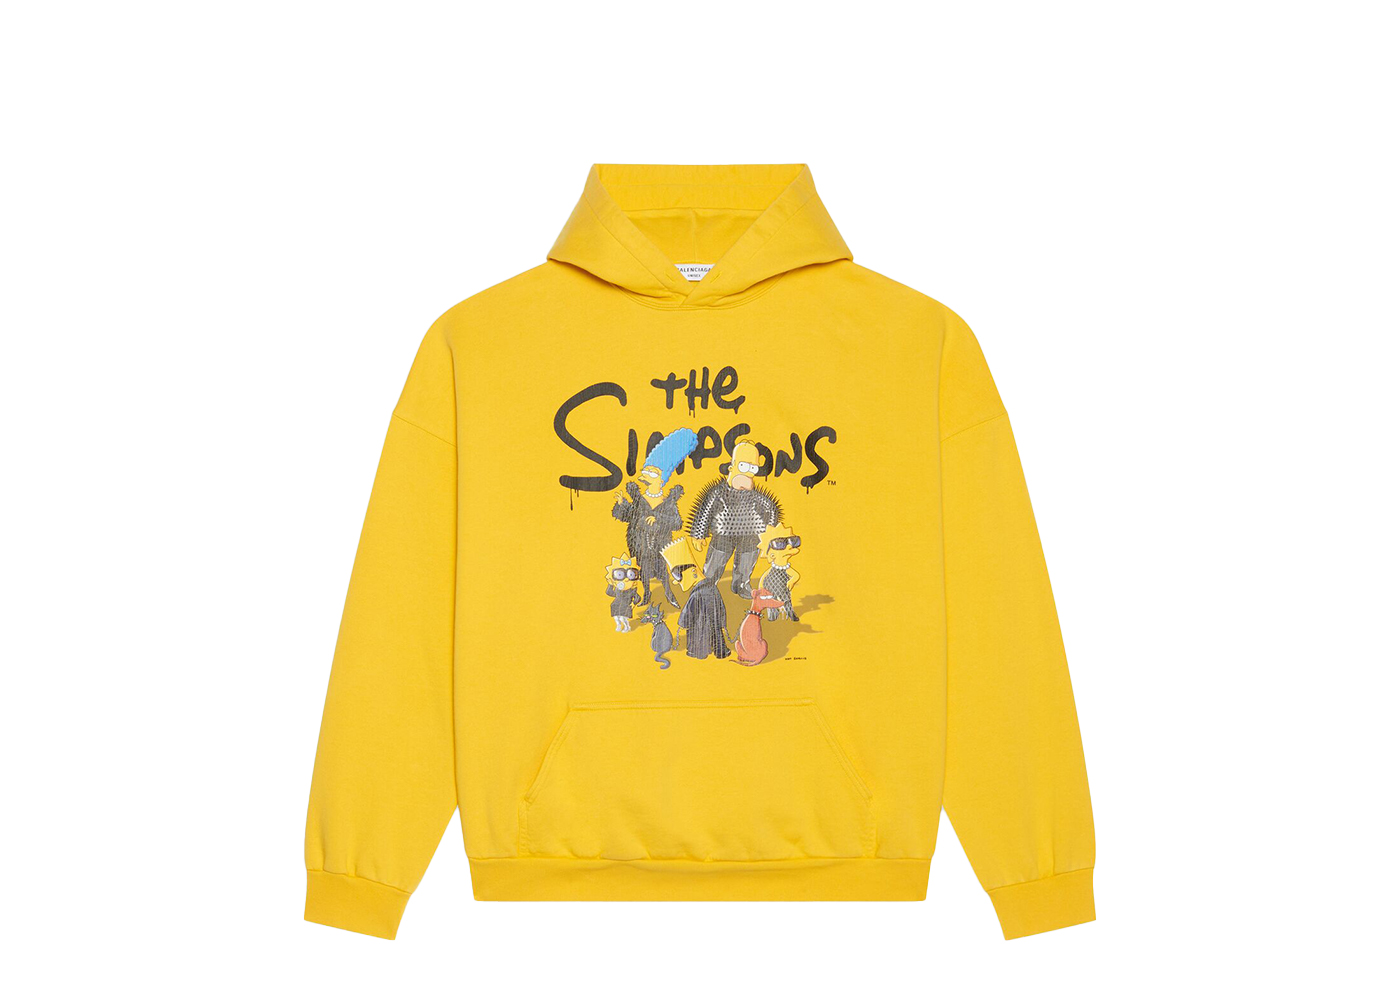 Balenciaga x The Simpsons hoodie